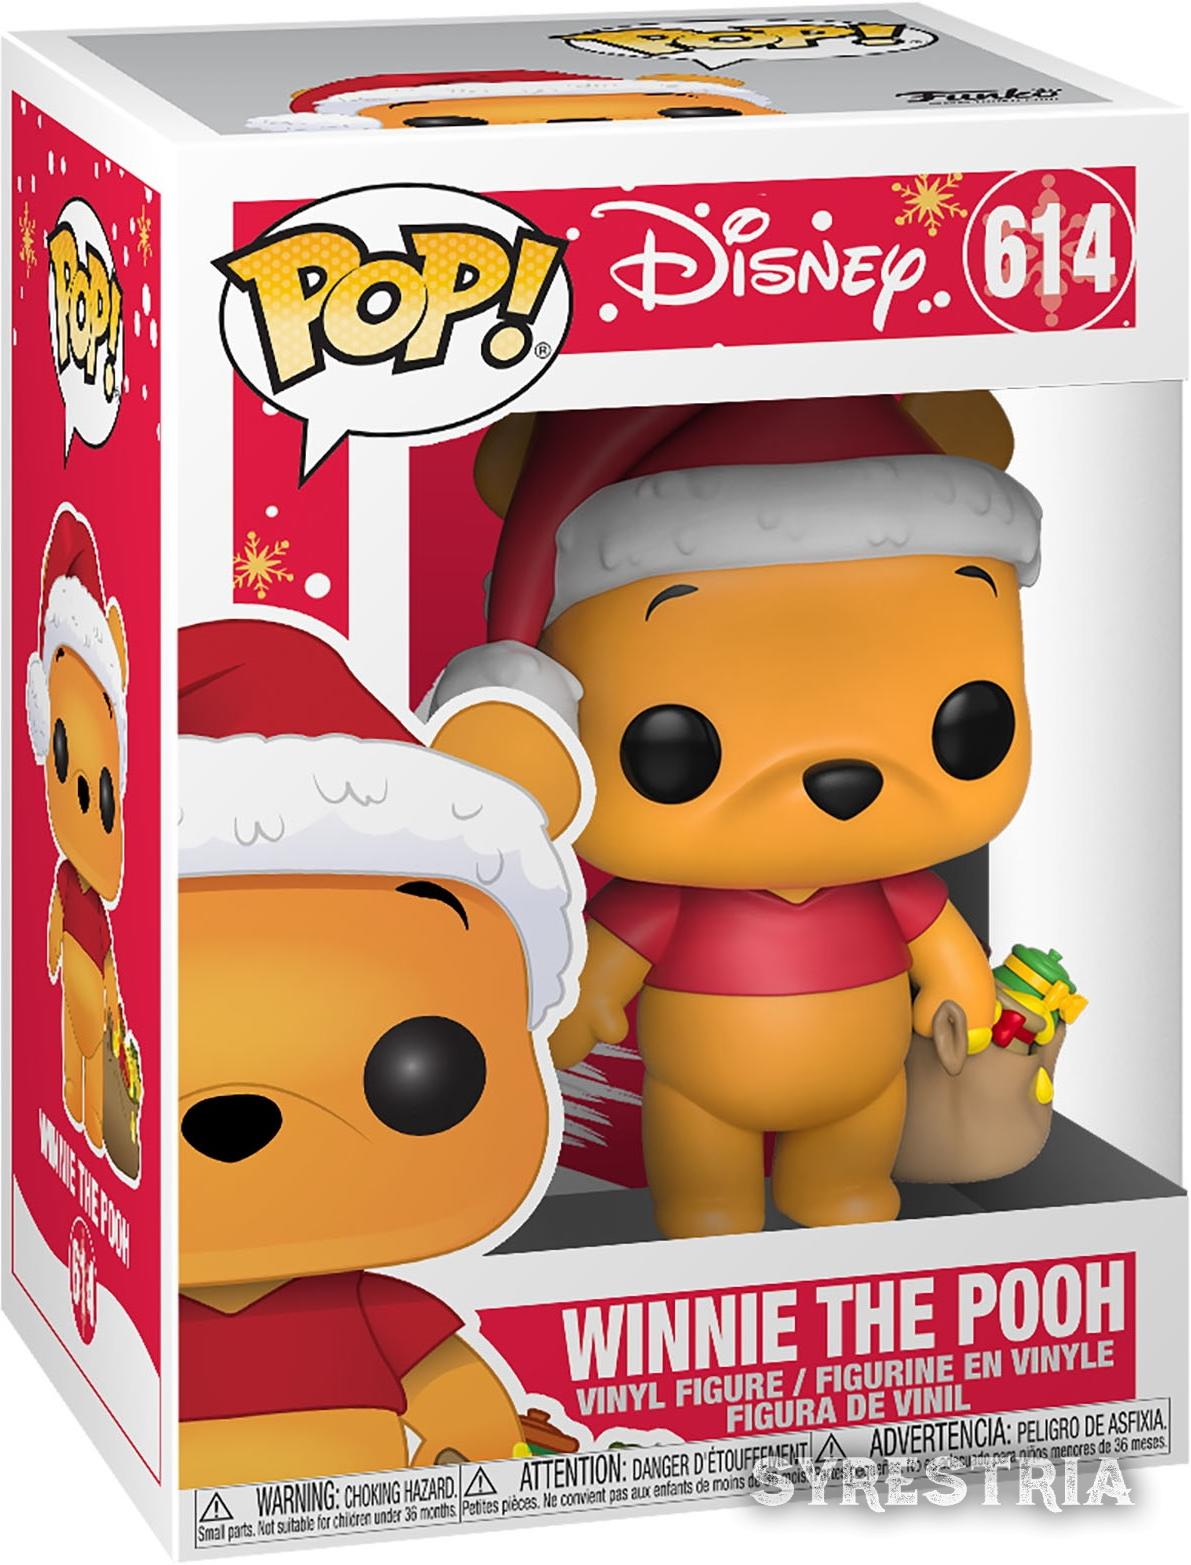 Disney - Winnie The Pooh Holiday 614 - Funko Pop! - Vinyl Figur